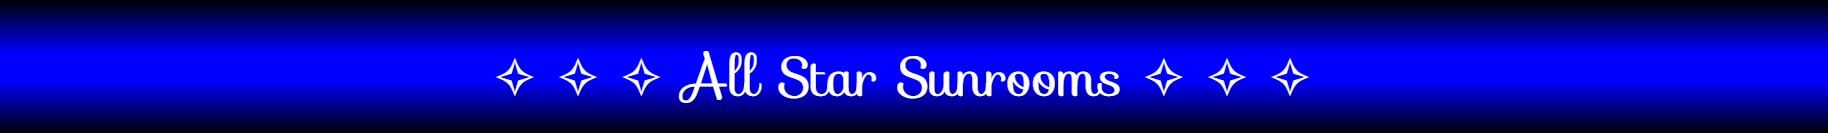 All Star Sunrooms logo